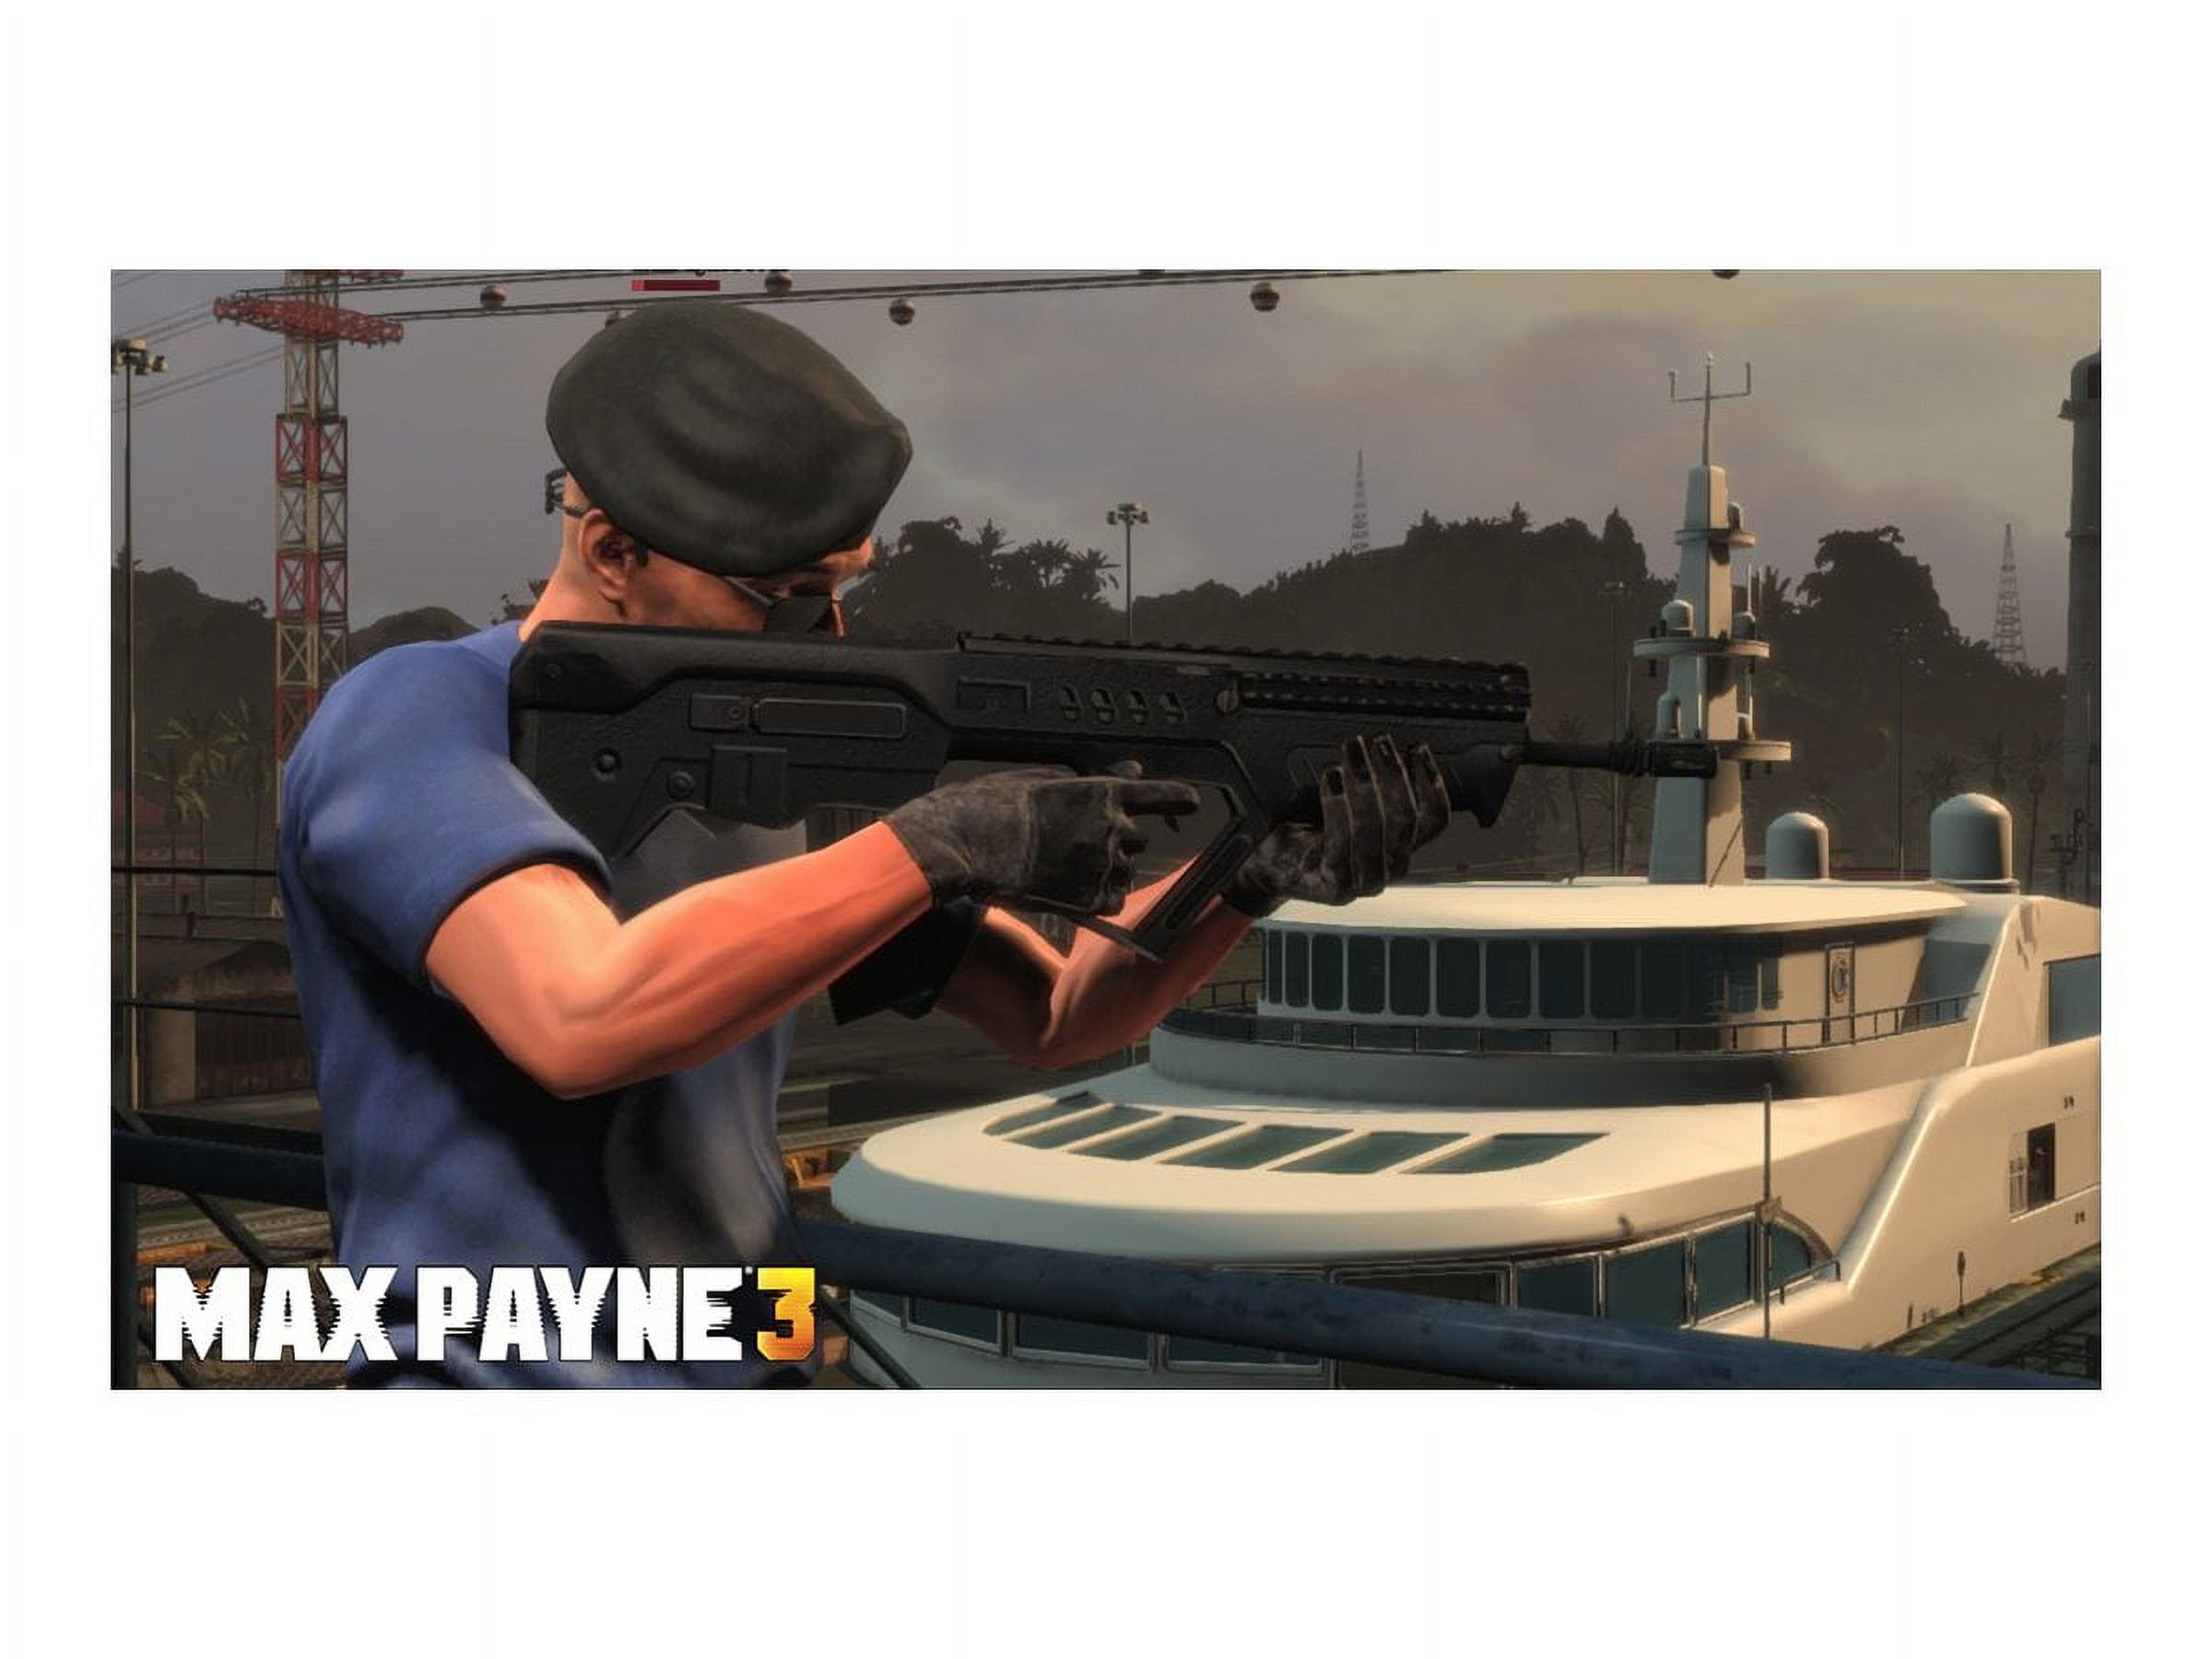 Max Payne 3 (Sony PlayStation 3, 2012) 710425376061